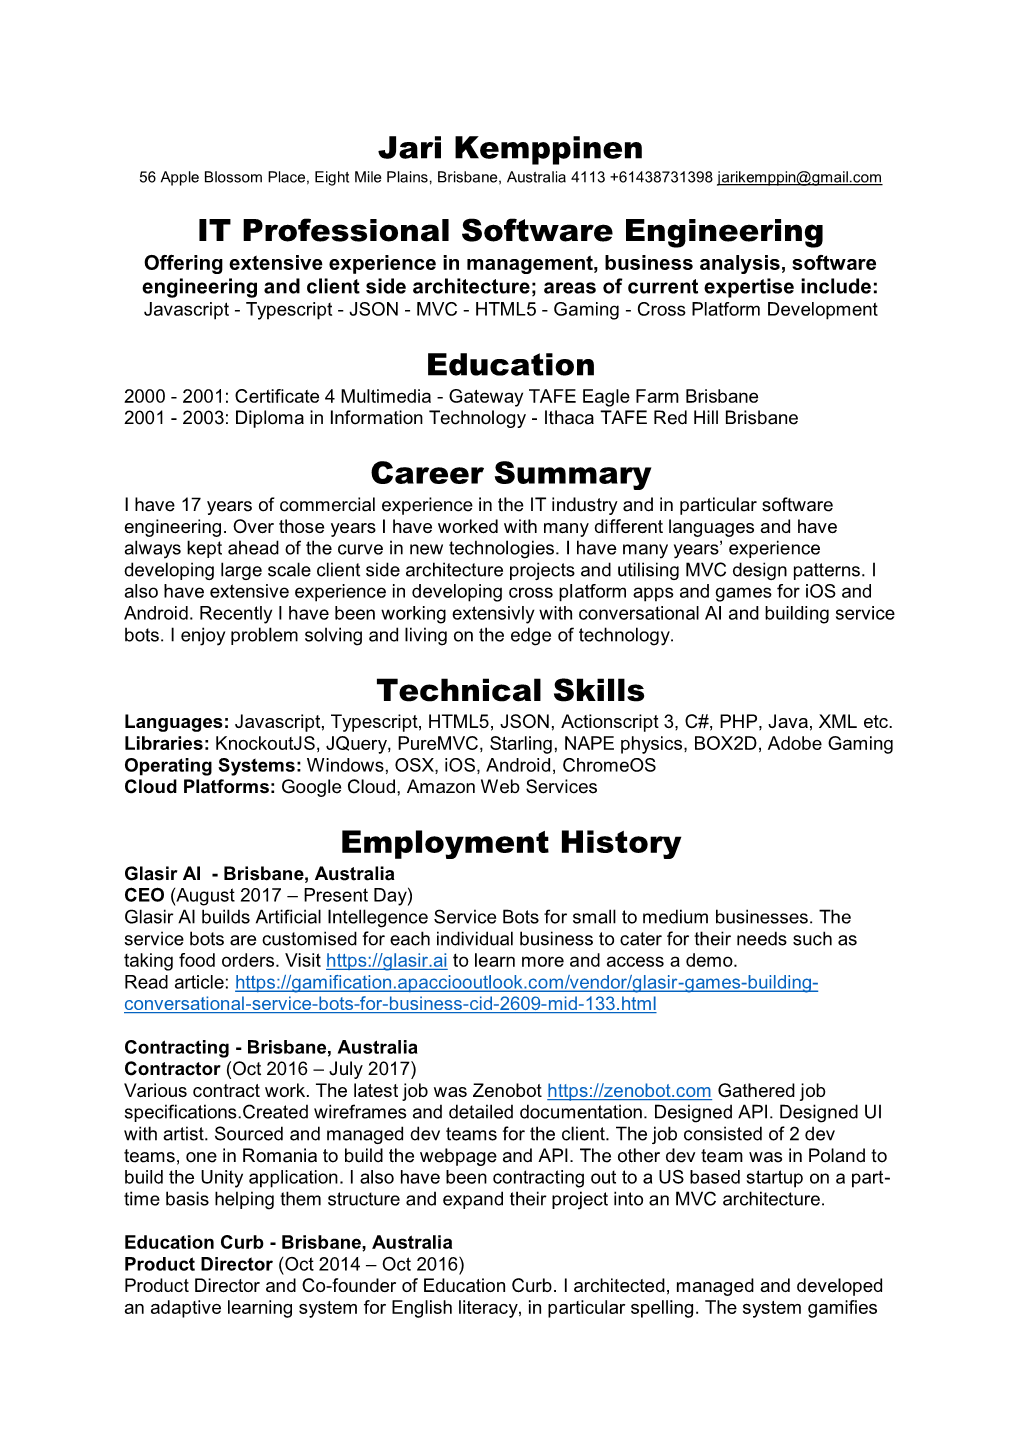 Jari Kemppinen IT Professional Software Engineering Education